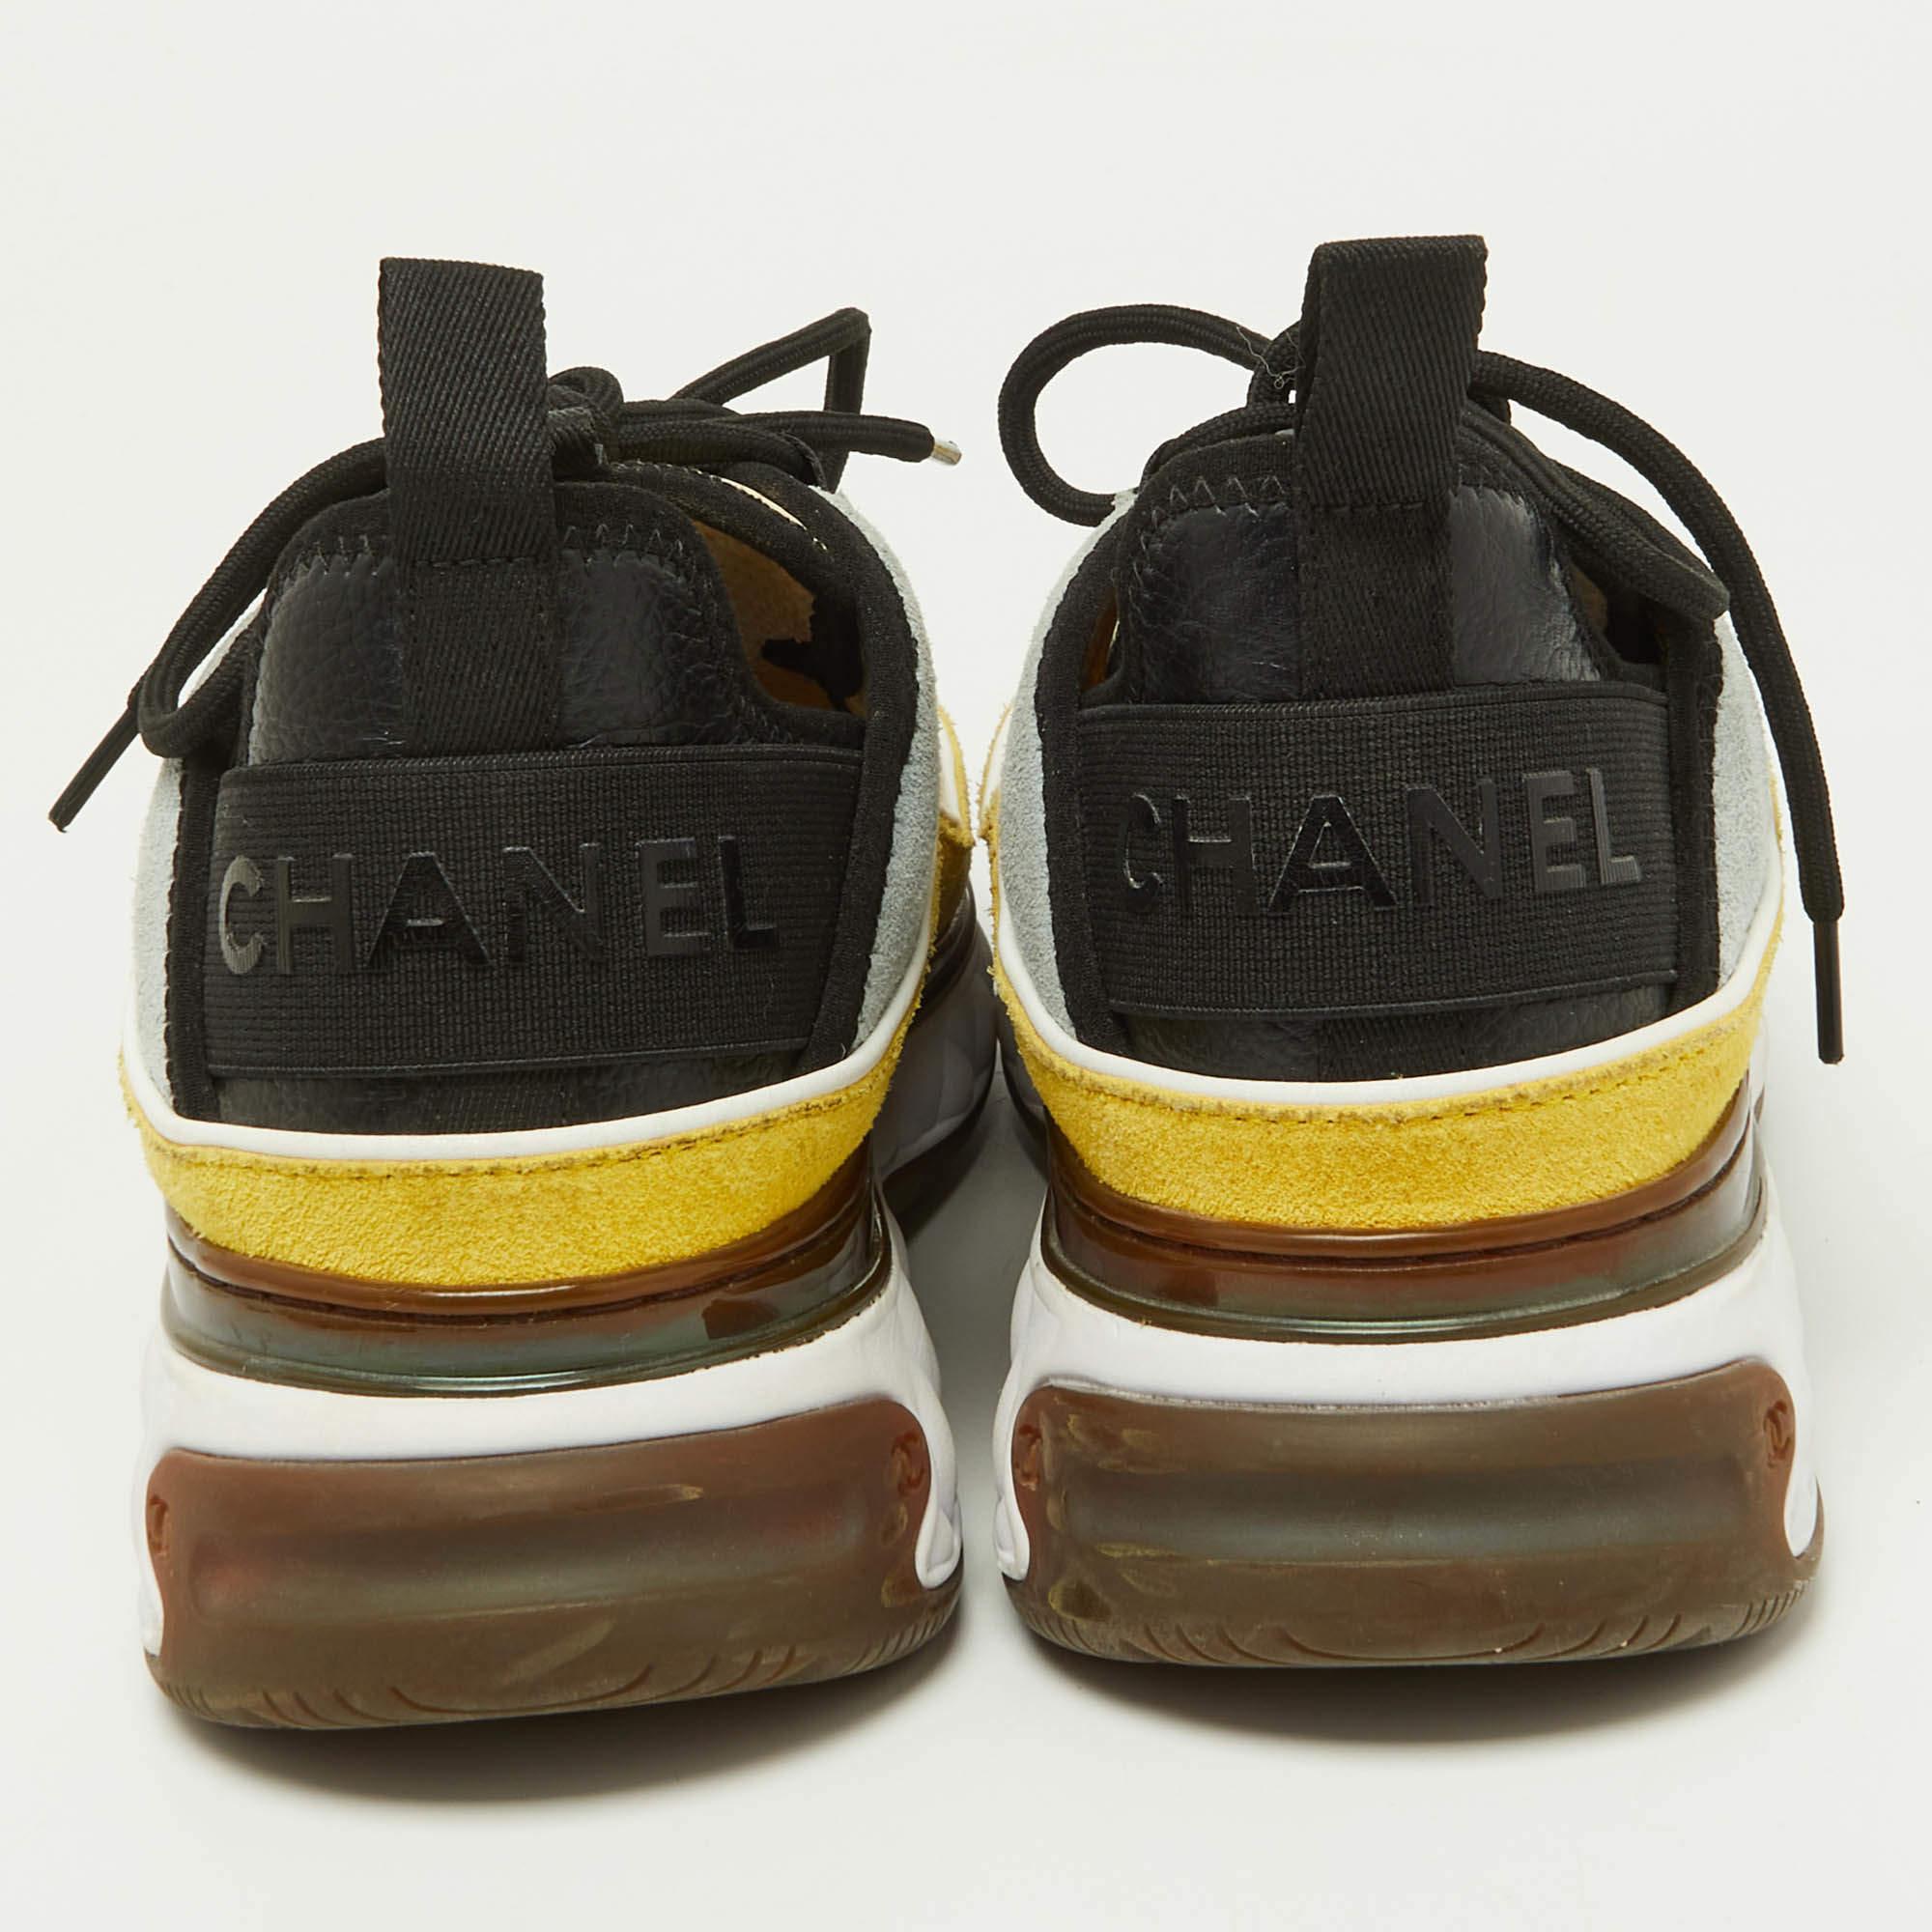 Chanel Multicolor Suede and Mesh CC Low Top Sneakers Size 40 In Good Condition For Sale In Dubai, Al Qouz 2